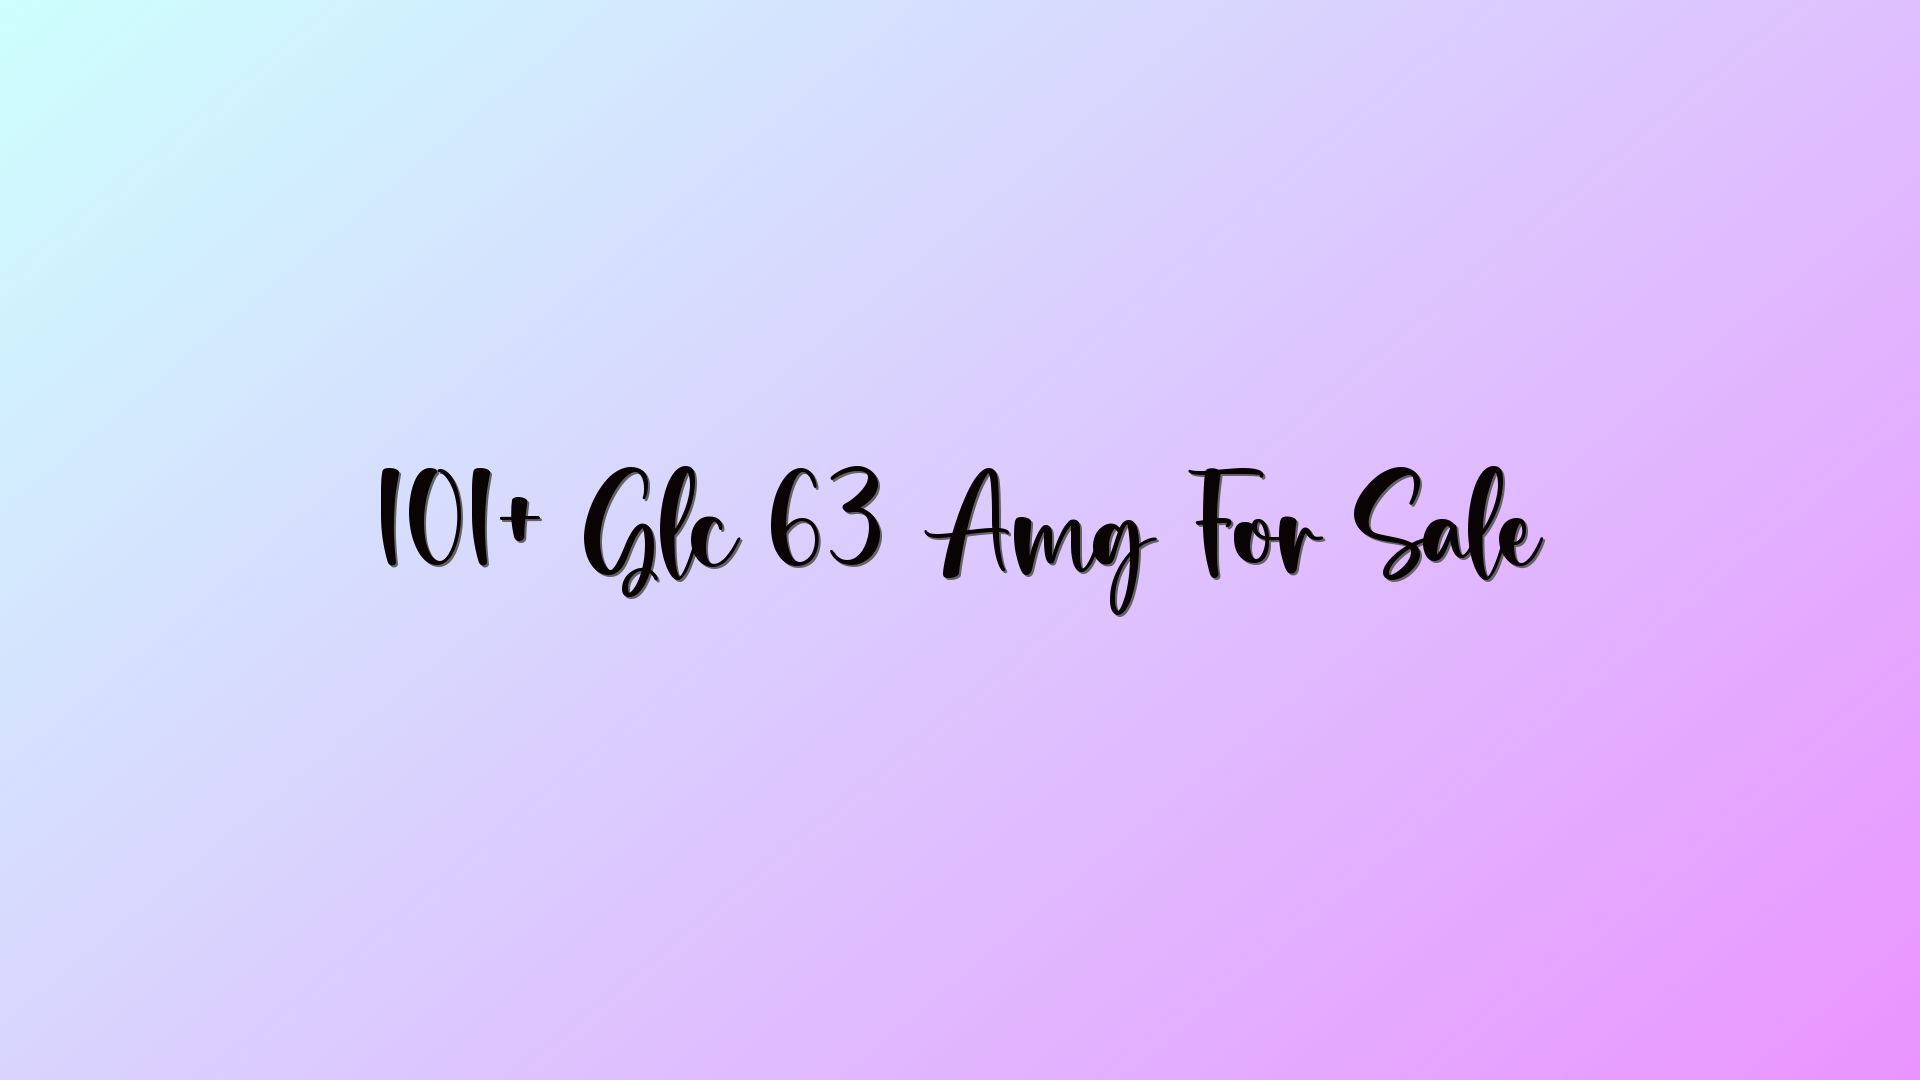 101+ Glc 63 Amg For Sale